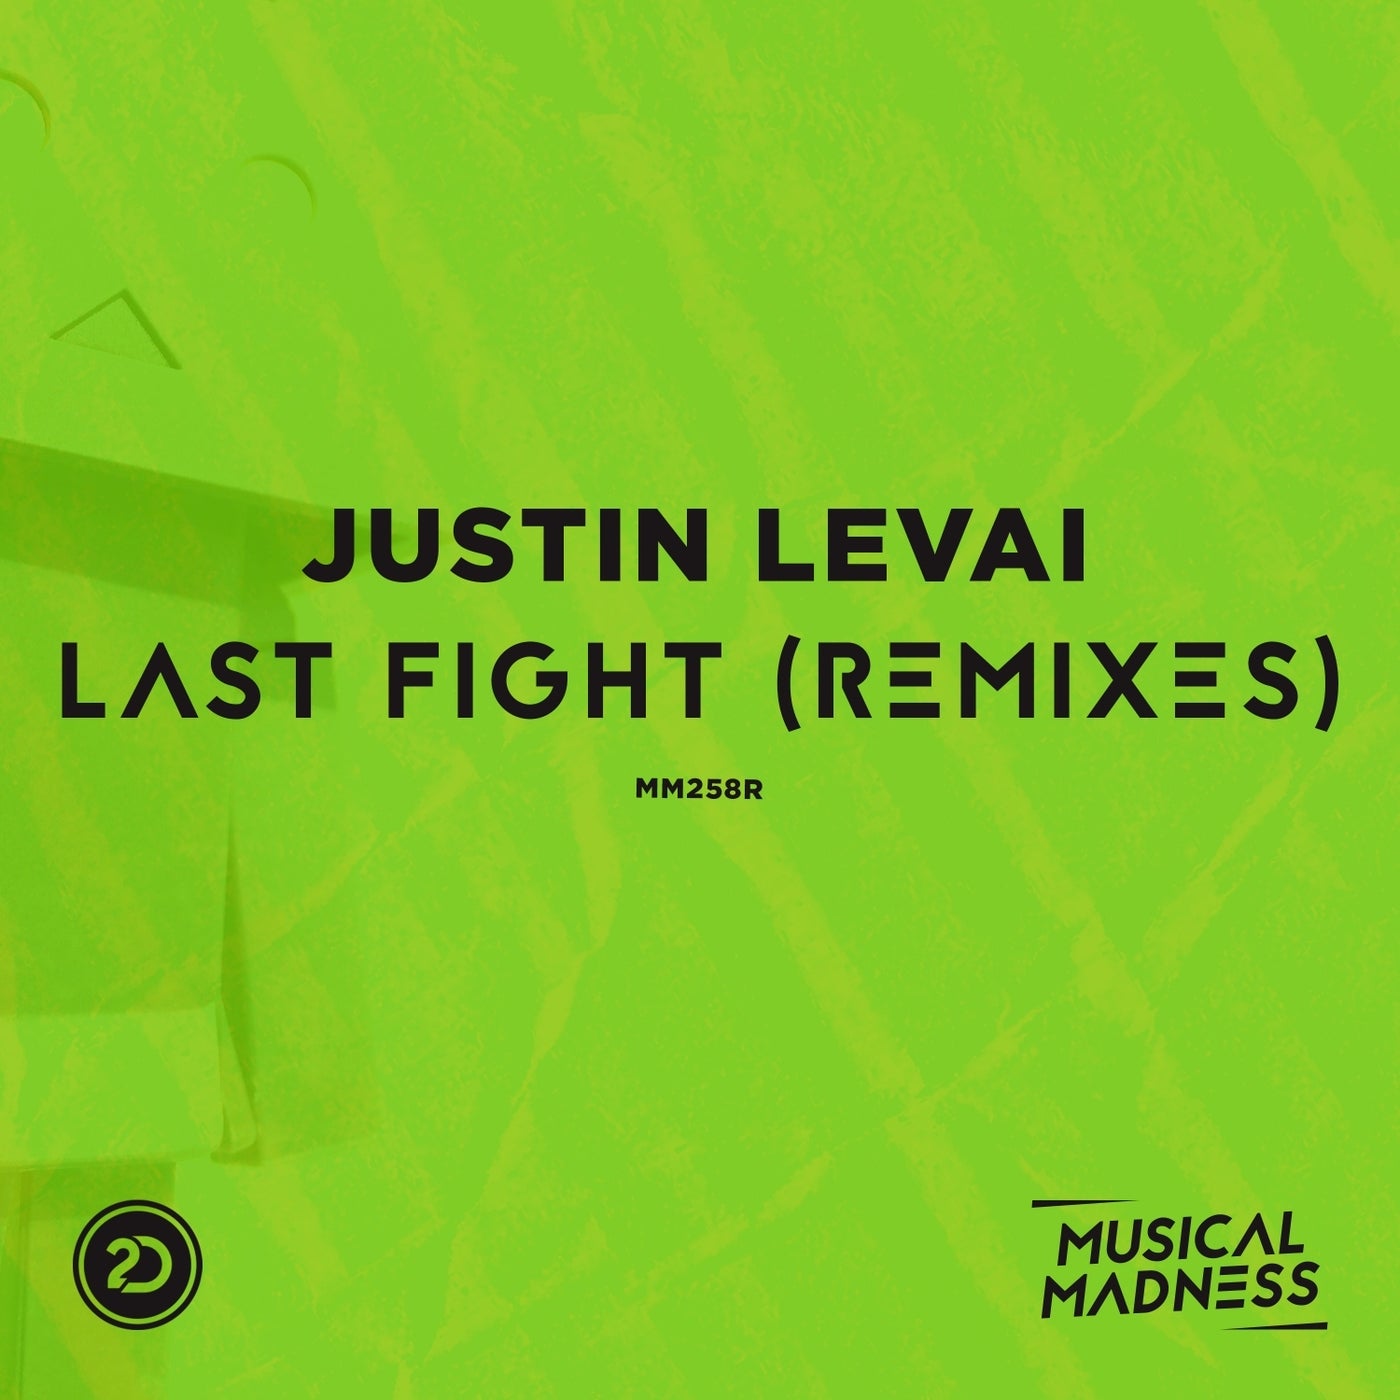 Last Fight (Remixes)